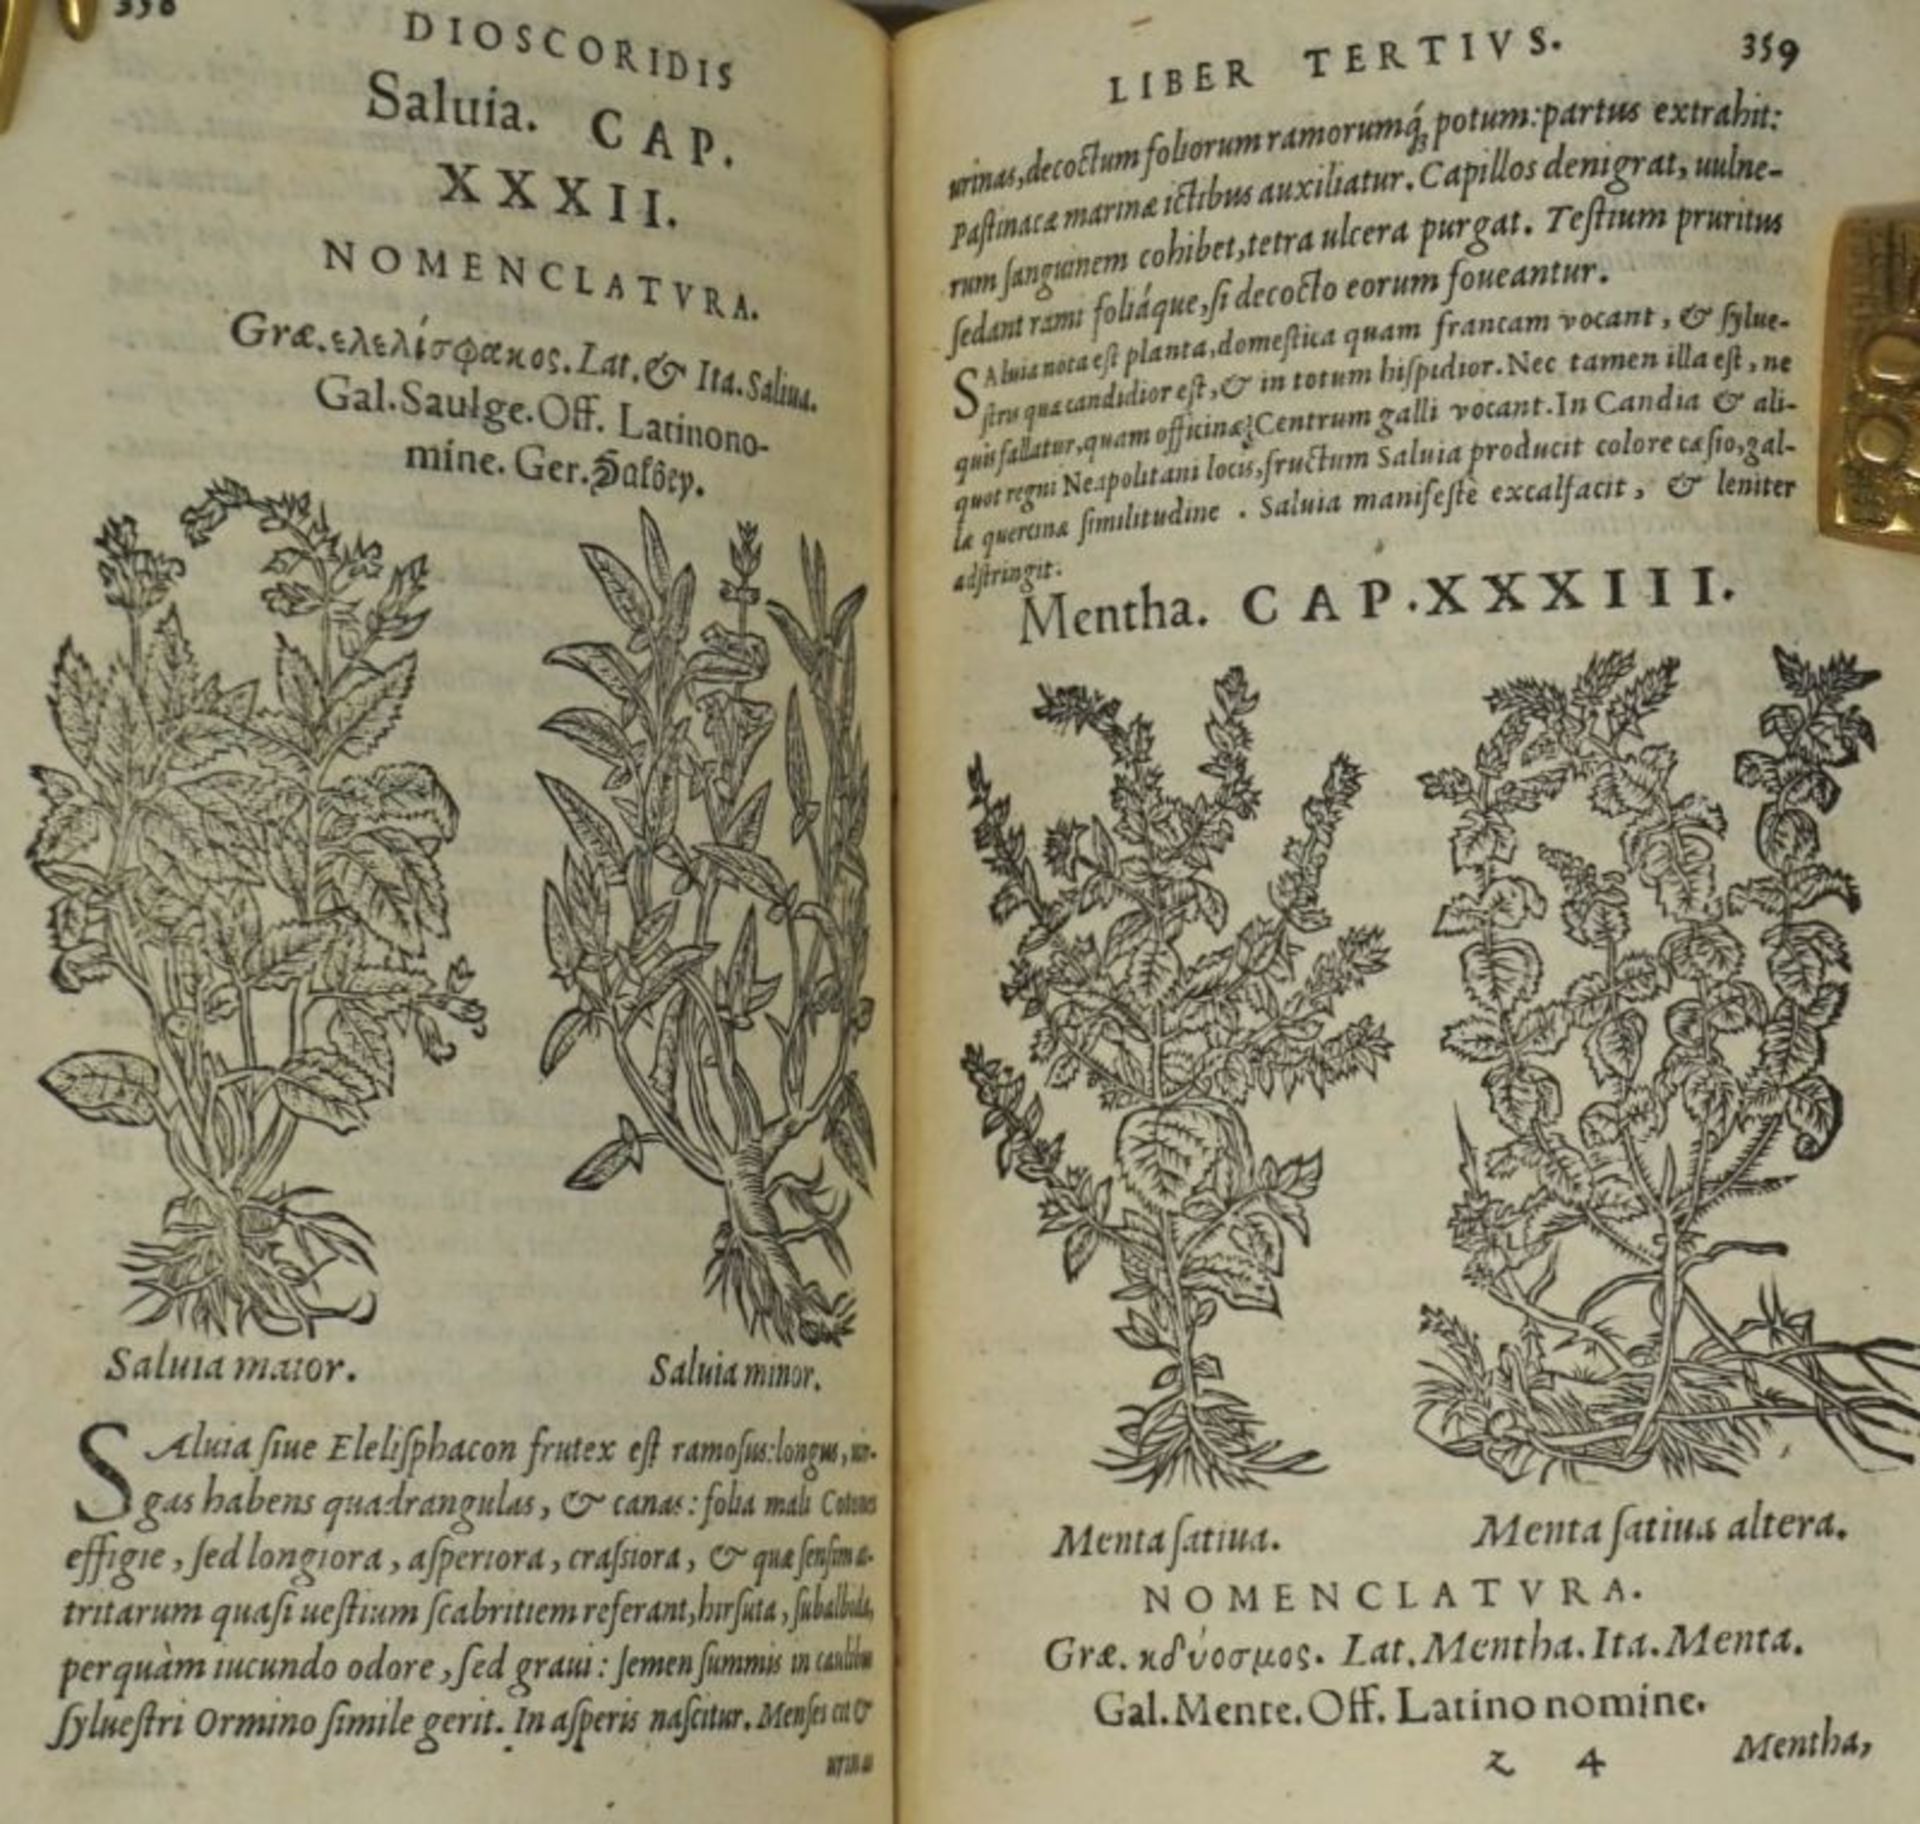 Dioscorides, Pedanius: De medicinali materia libri sex